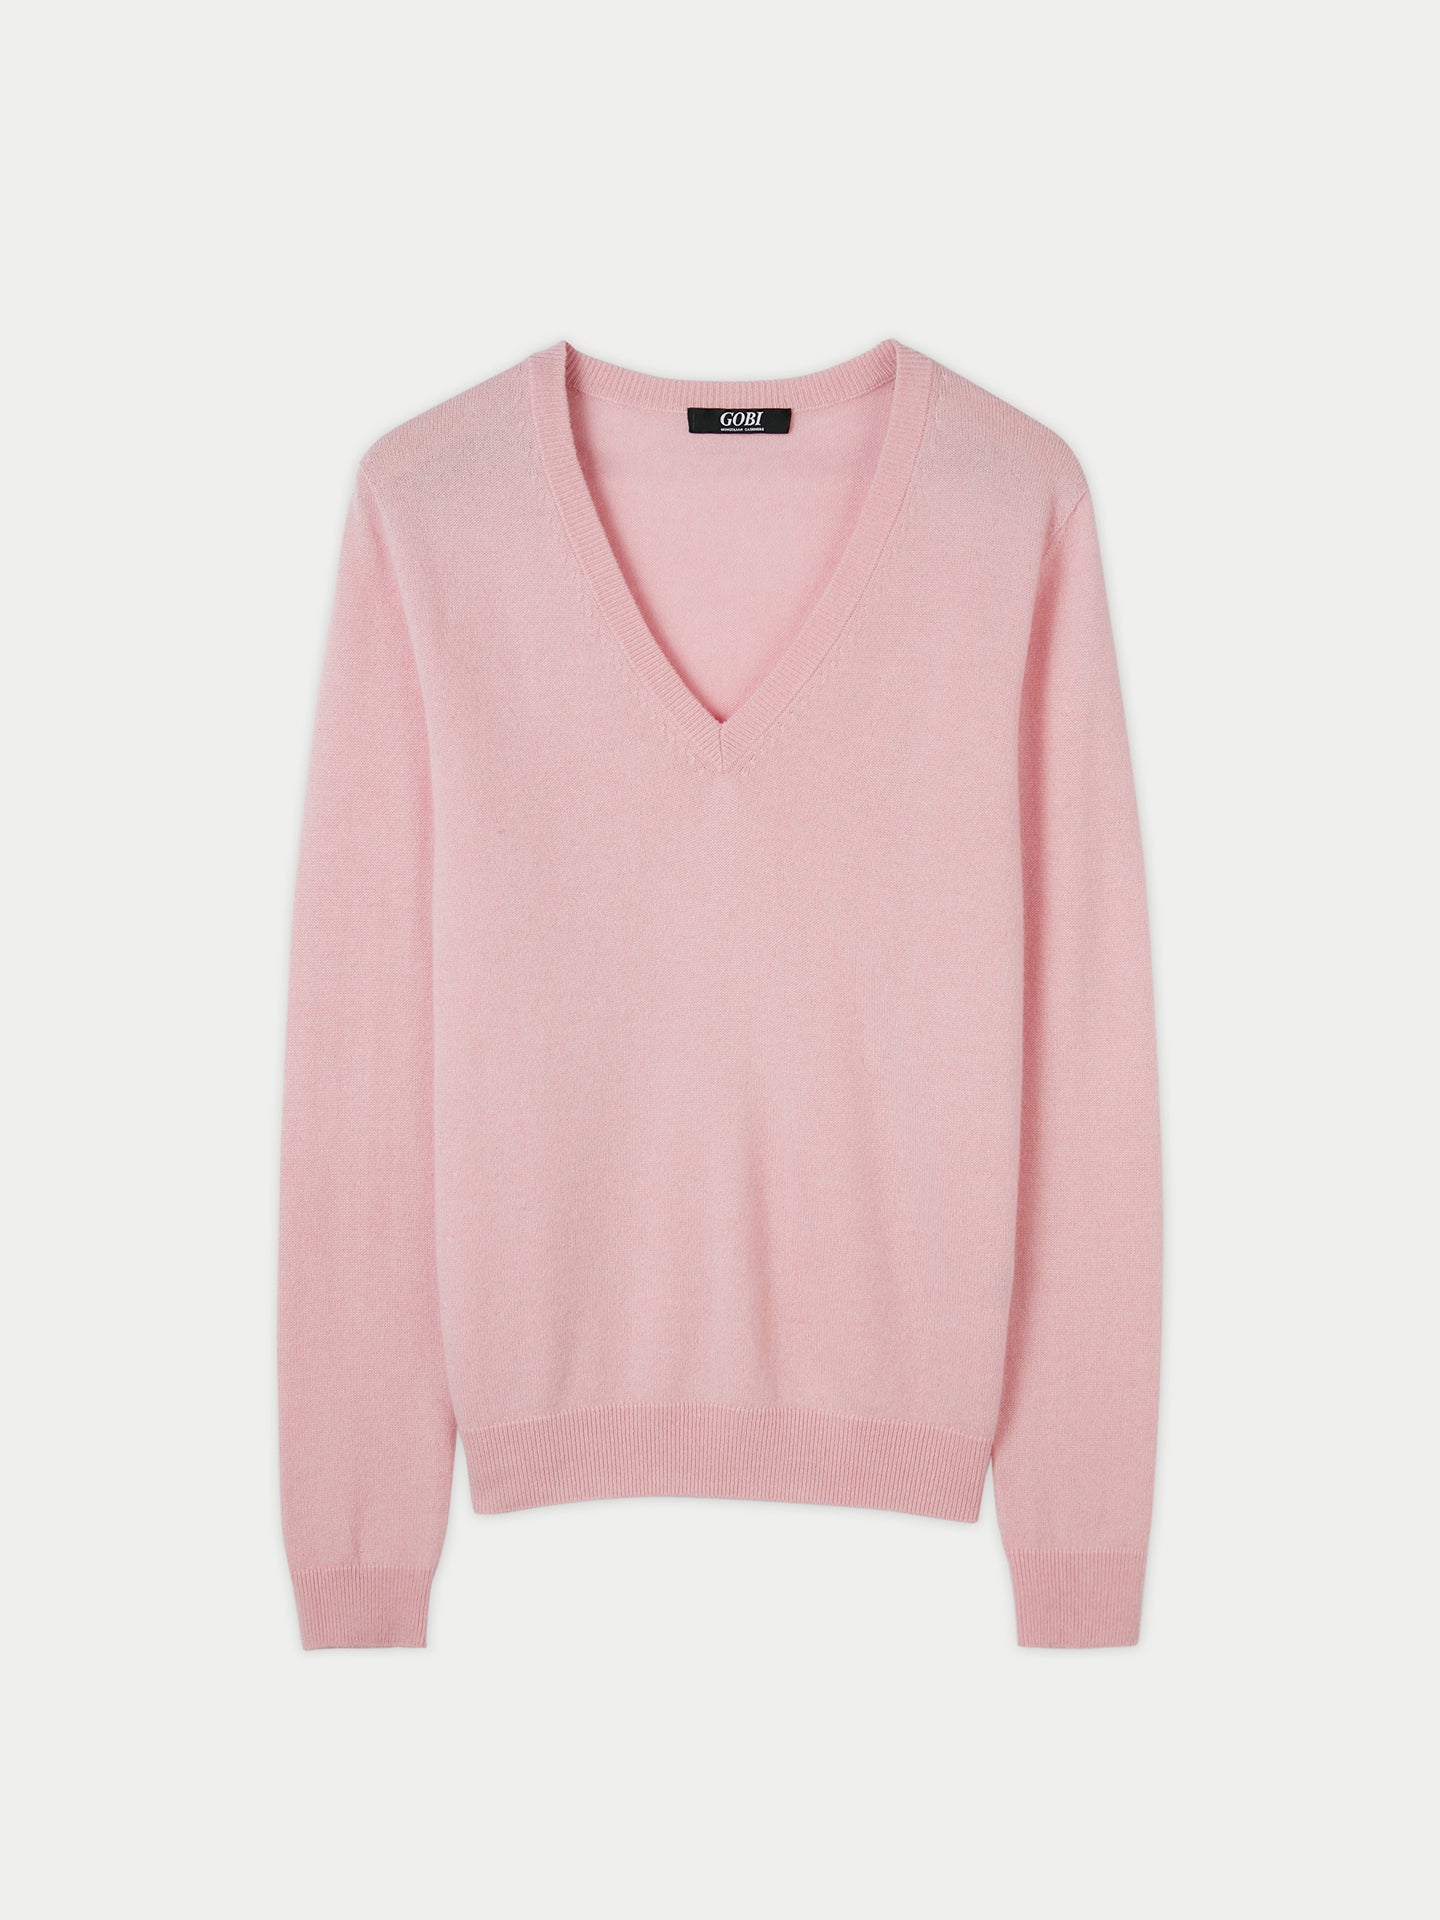 Women's Cashmere Basic V-Neck Sweater Pink - Gobi Cashmere